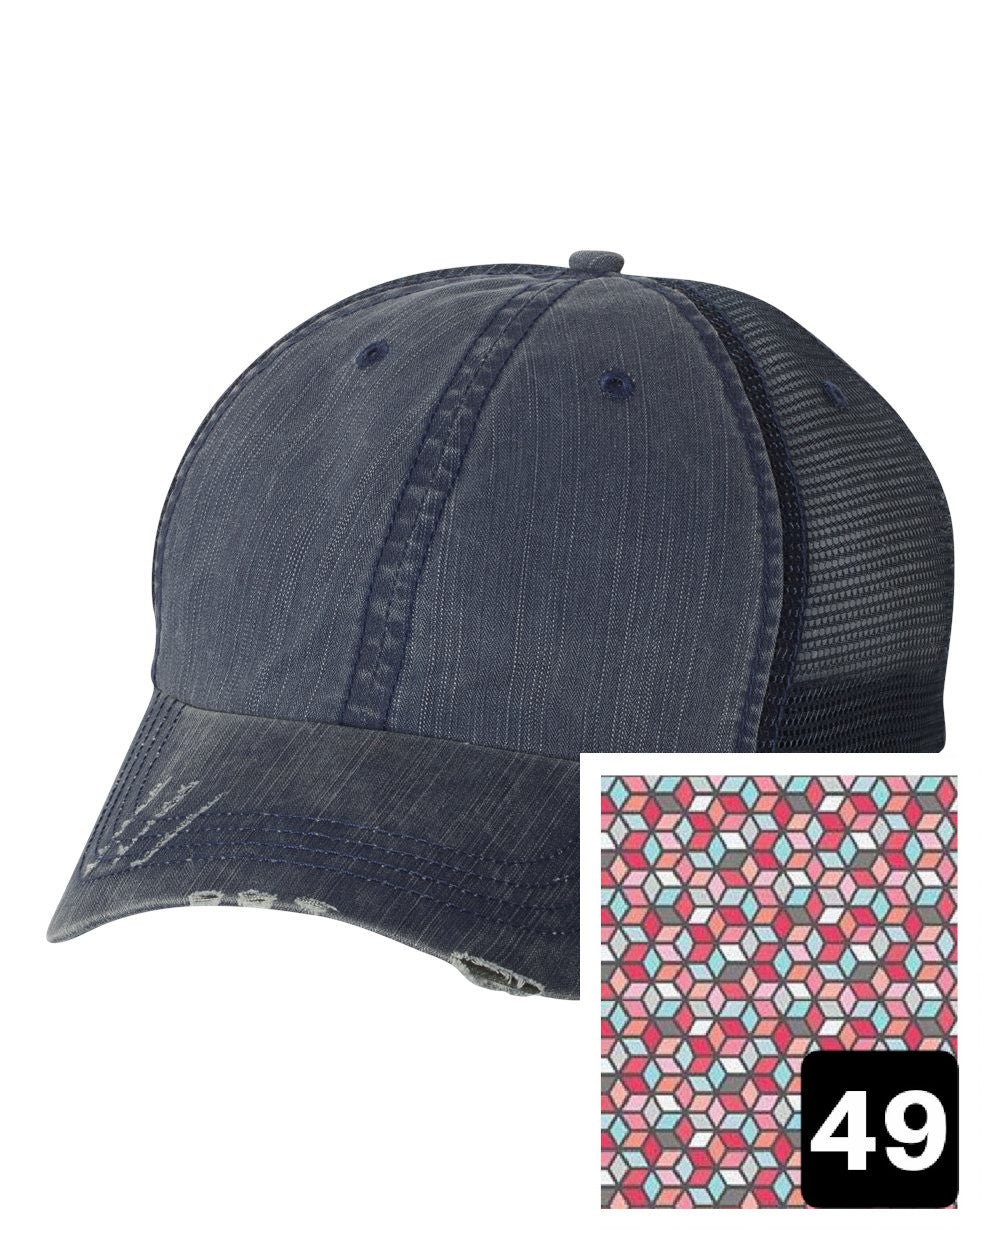 Minnesota Hat | Navy Distressed Trucker Cap | Many Fabric Choices